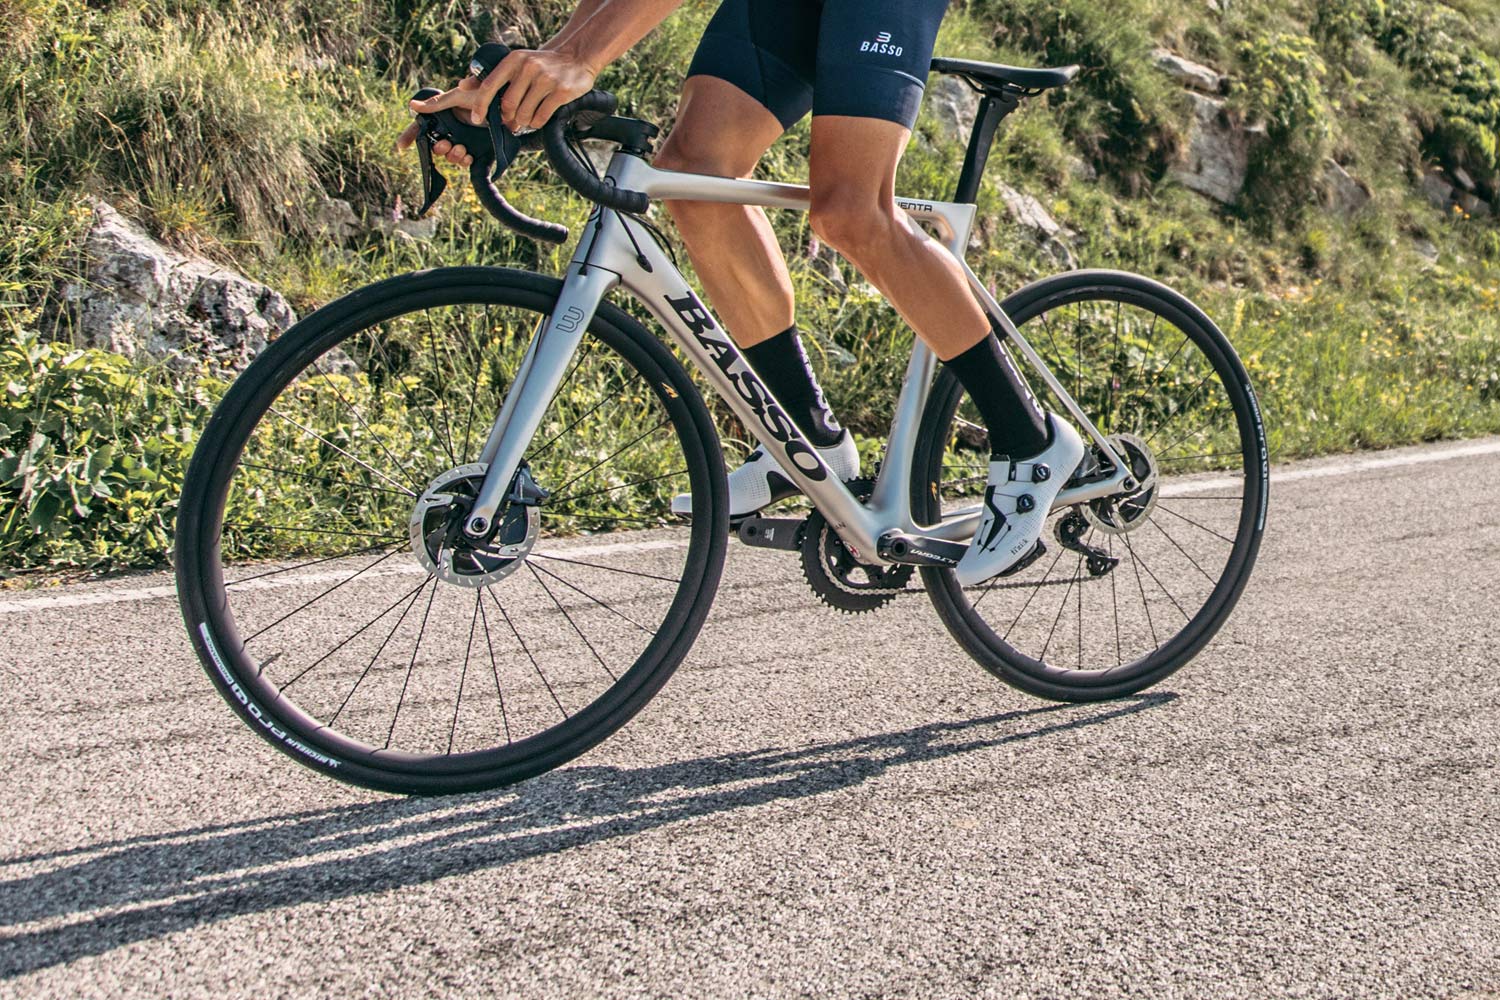 Basso redesigns Venta carbon road bike to celebrate its Venti anniversary